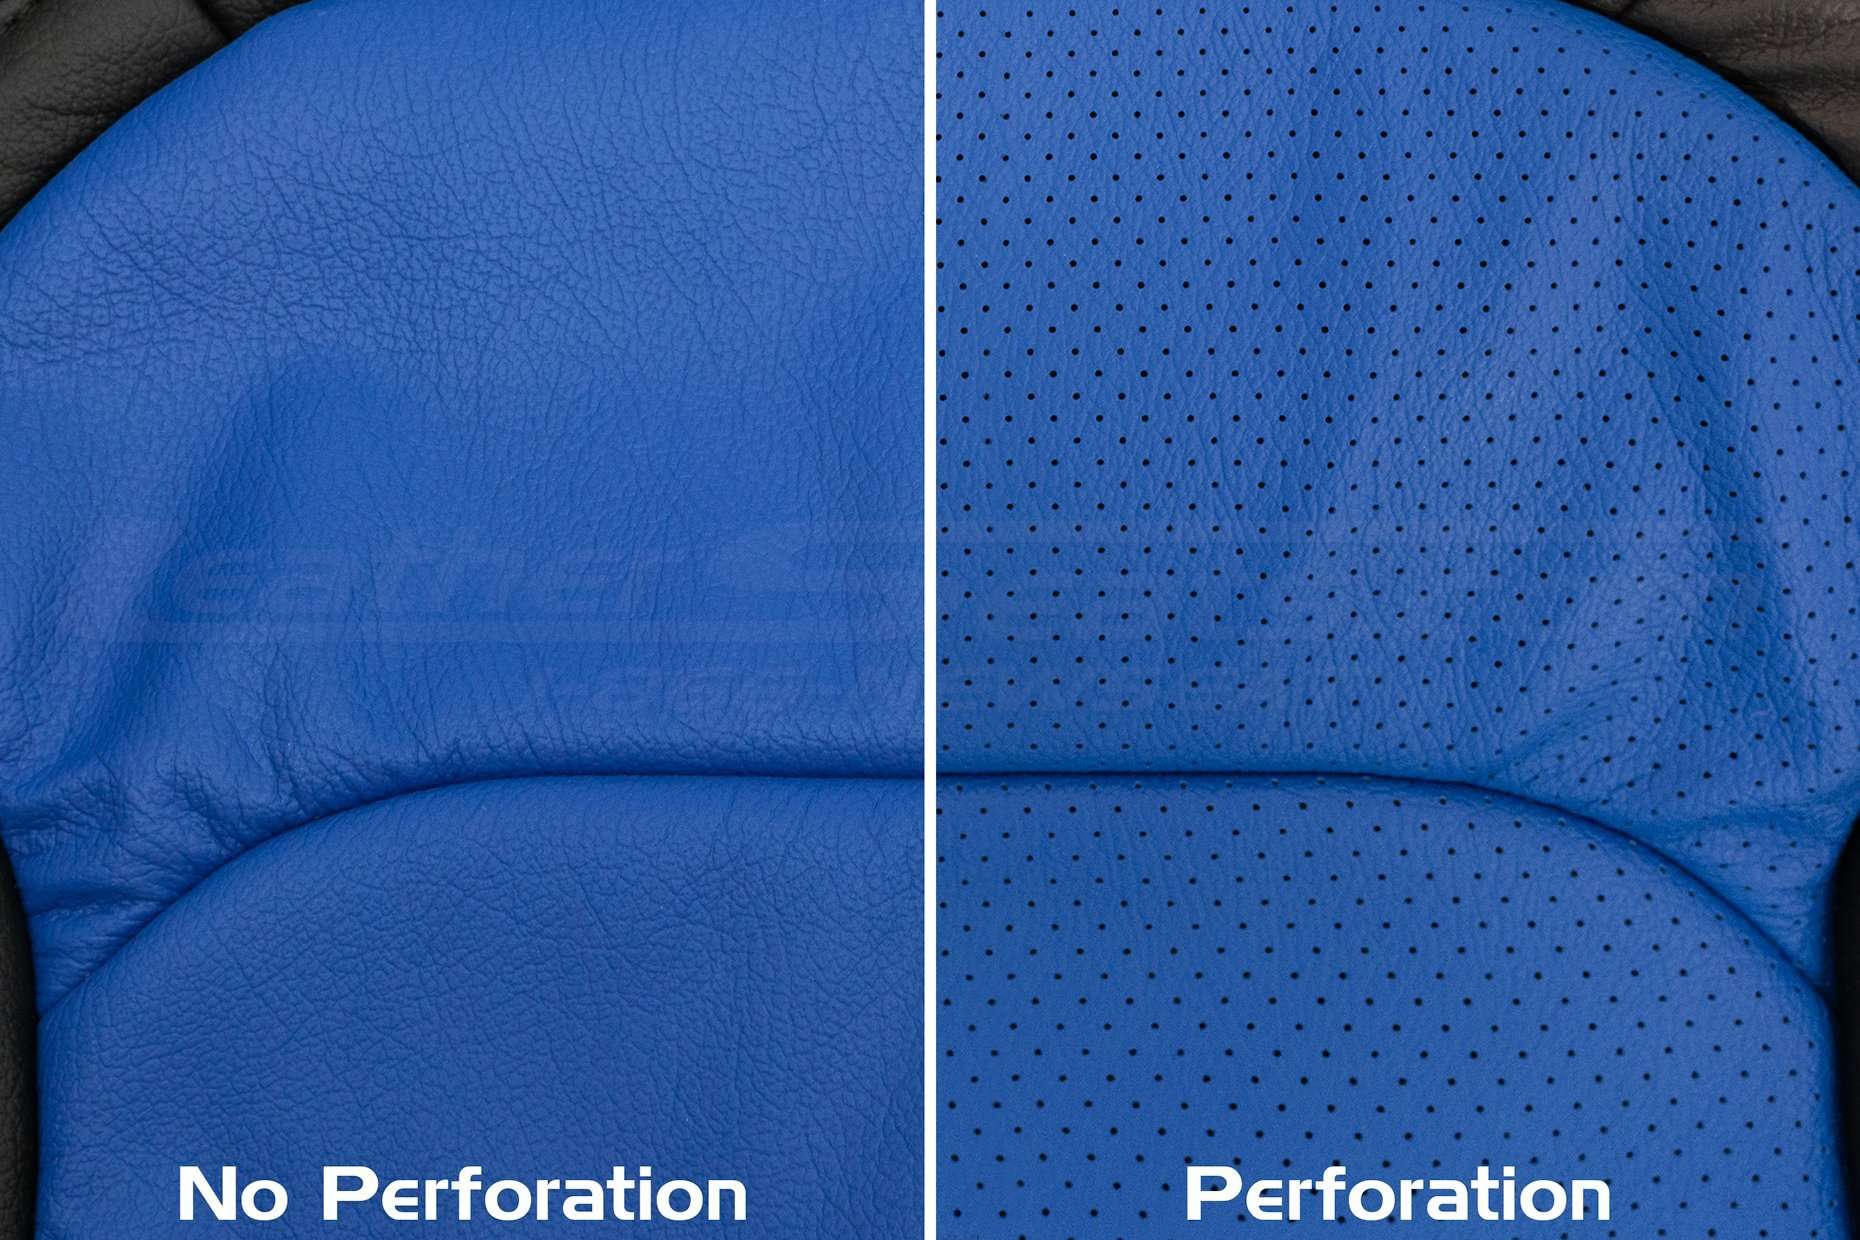 Perforation vs Non-Perforation